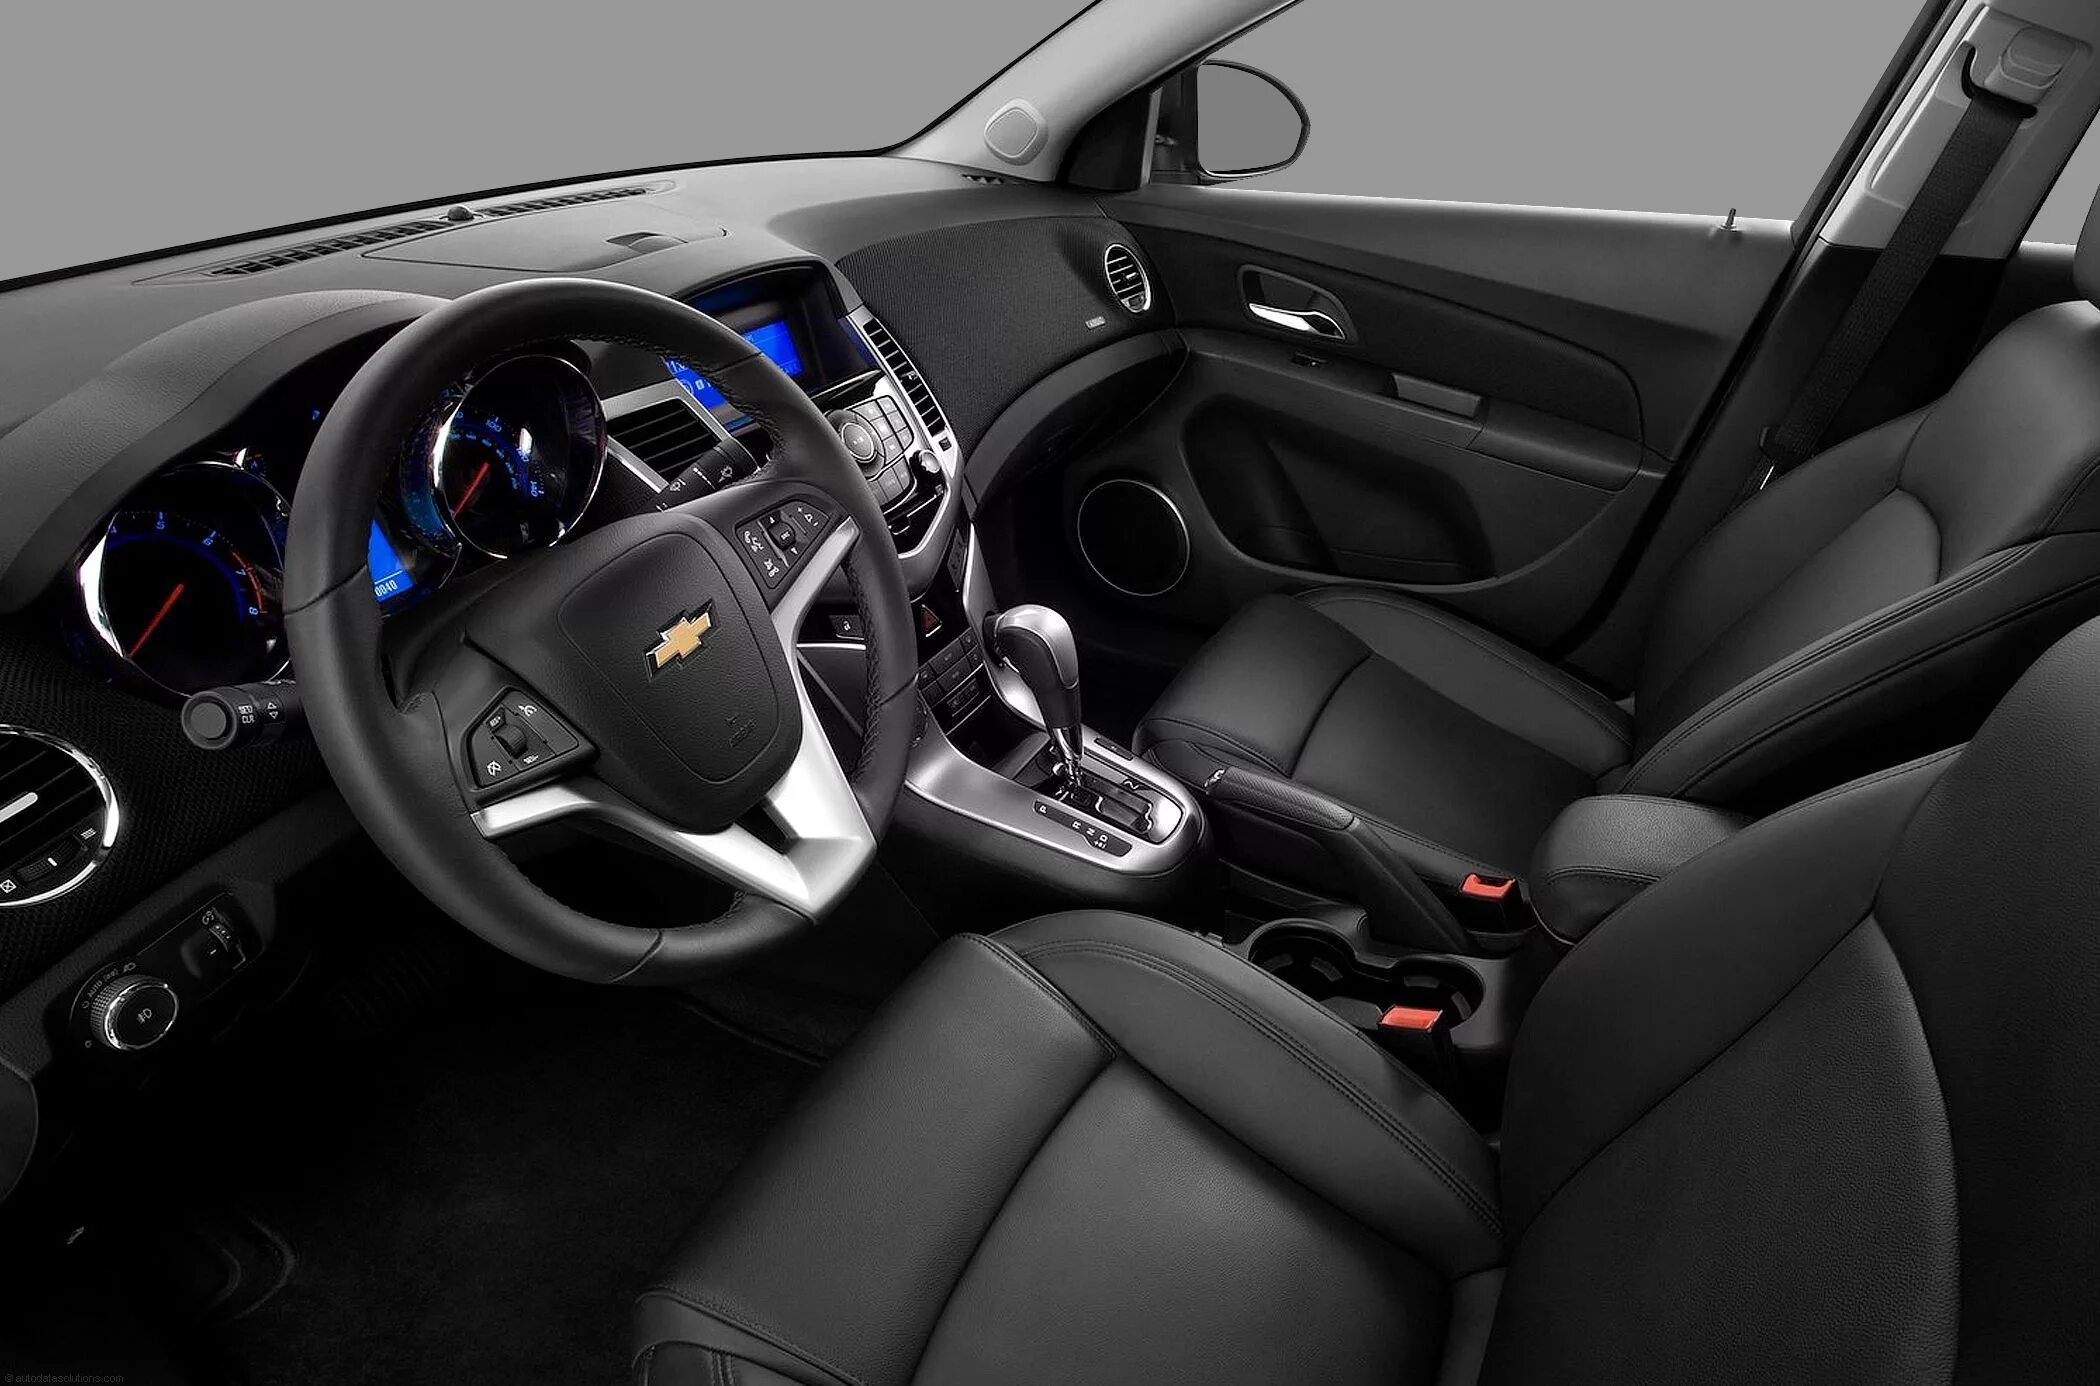 Шевроле внутри салона. Шевроле Круз седан 2014 салон. Chevrolet Cruze RS 2011-. Chevrolet Cruze Interior. Chevrolet Cruze 2014 салон.